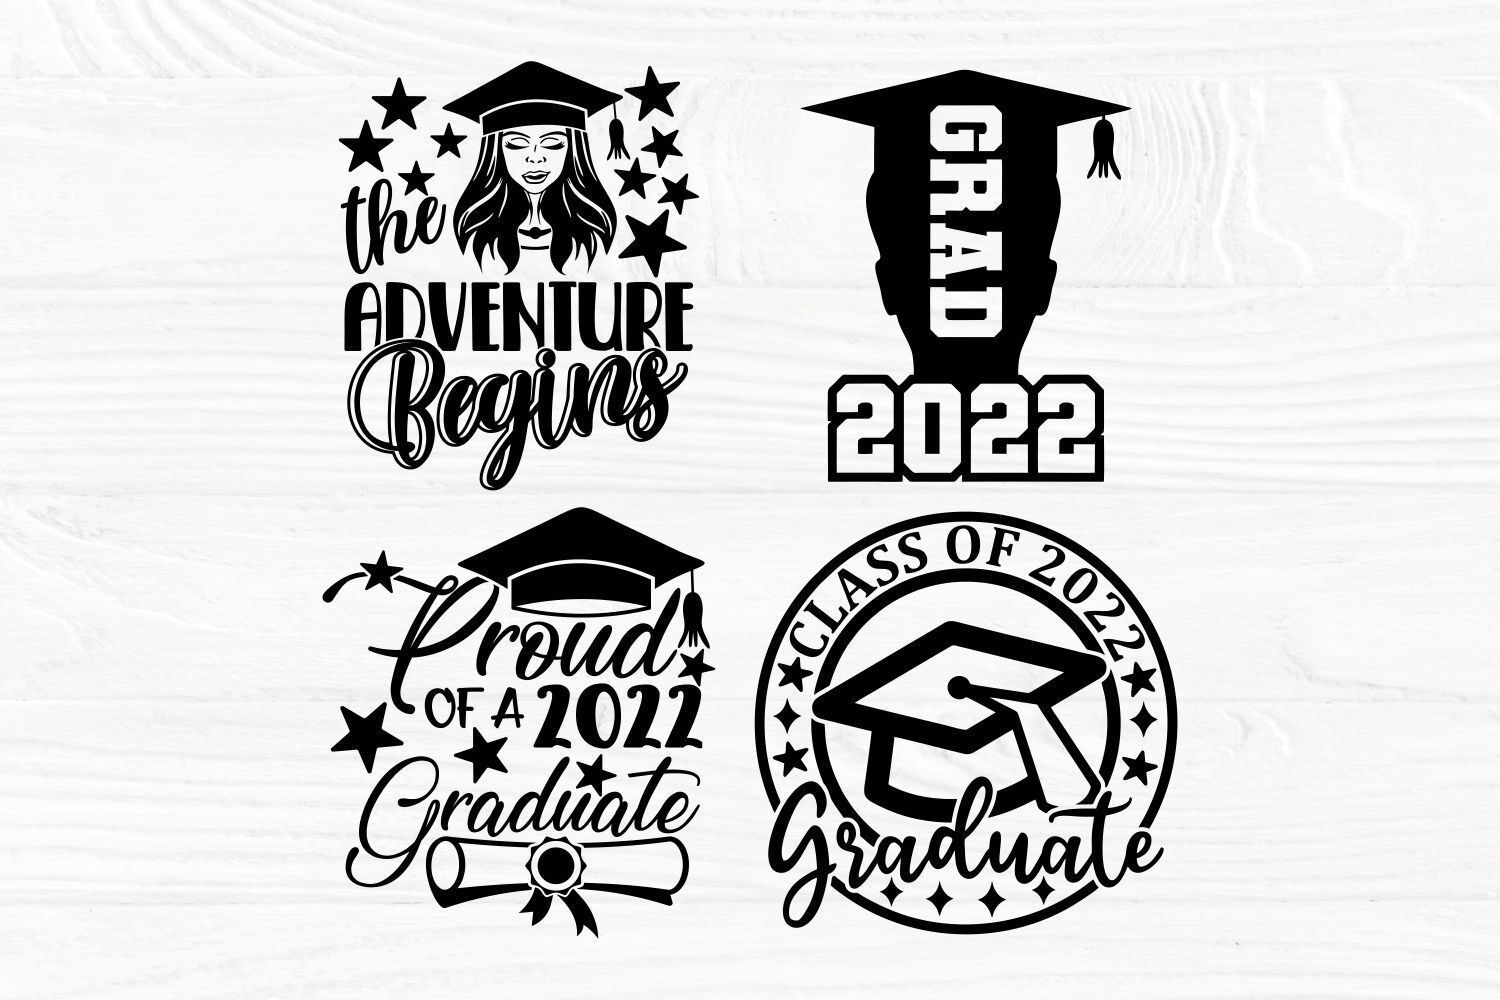 graduation symbols 2022